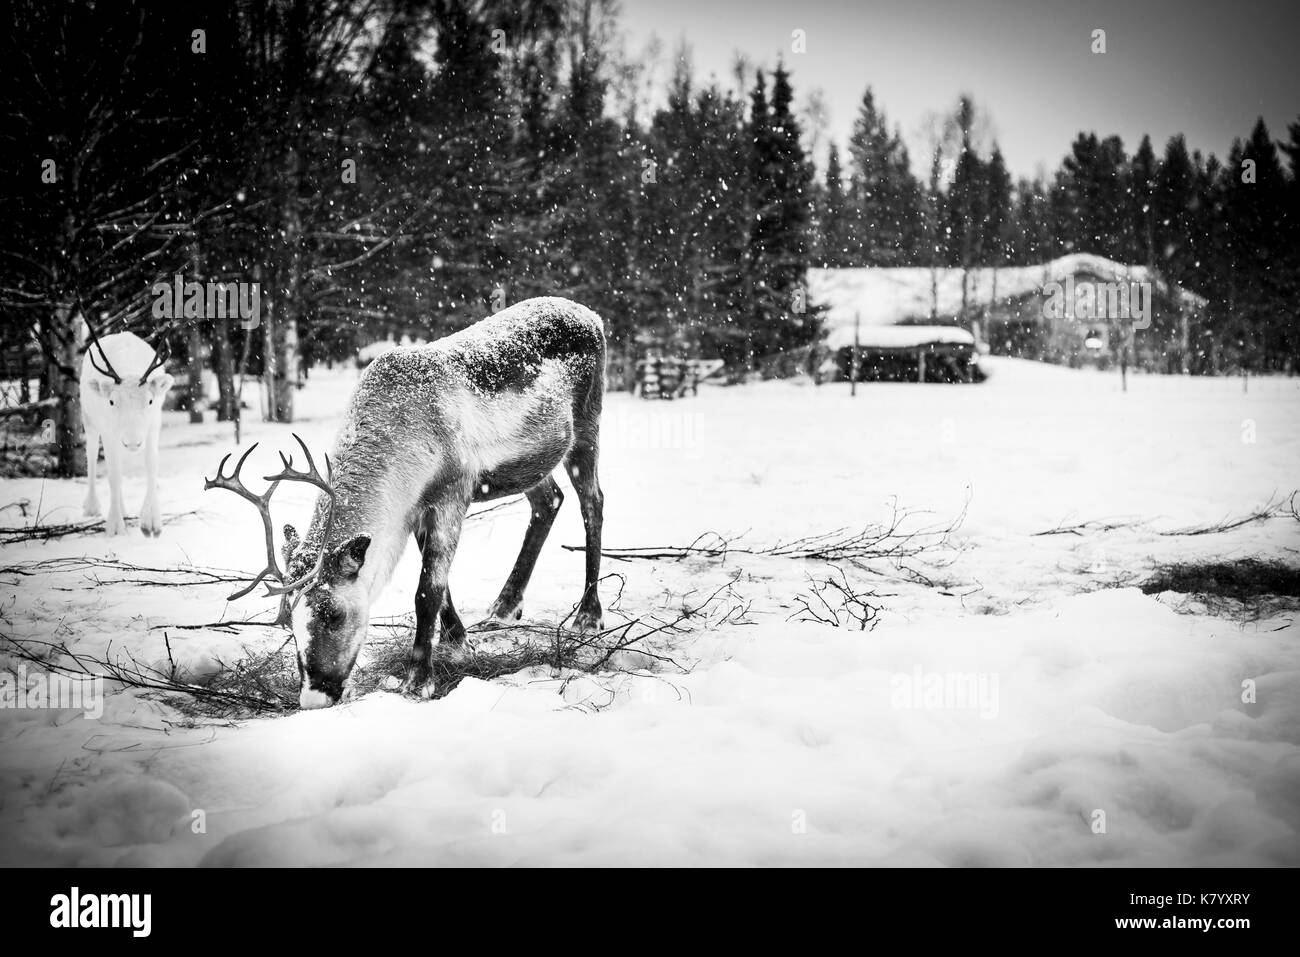 Reindeer foraging in snow, Lapland, Finland. Stock Photo